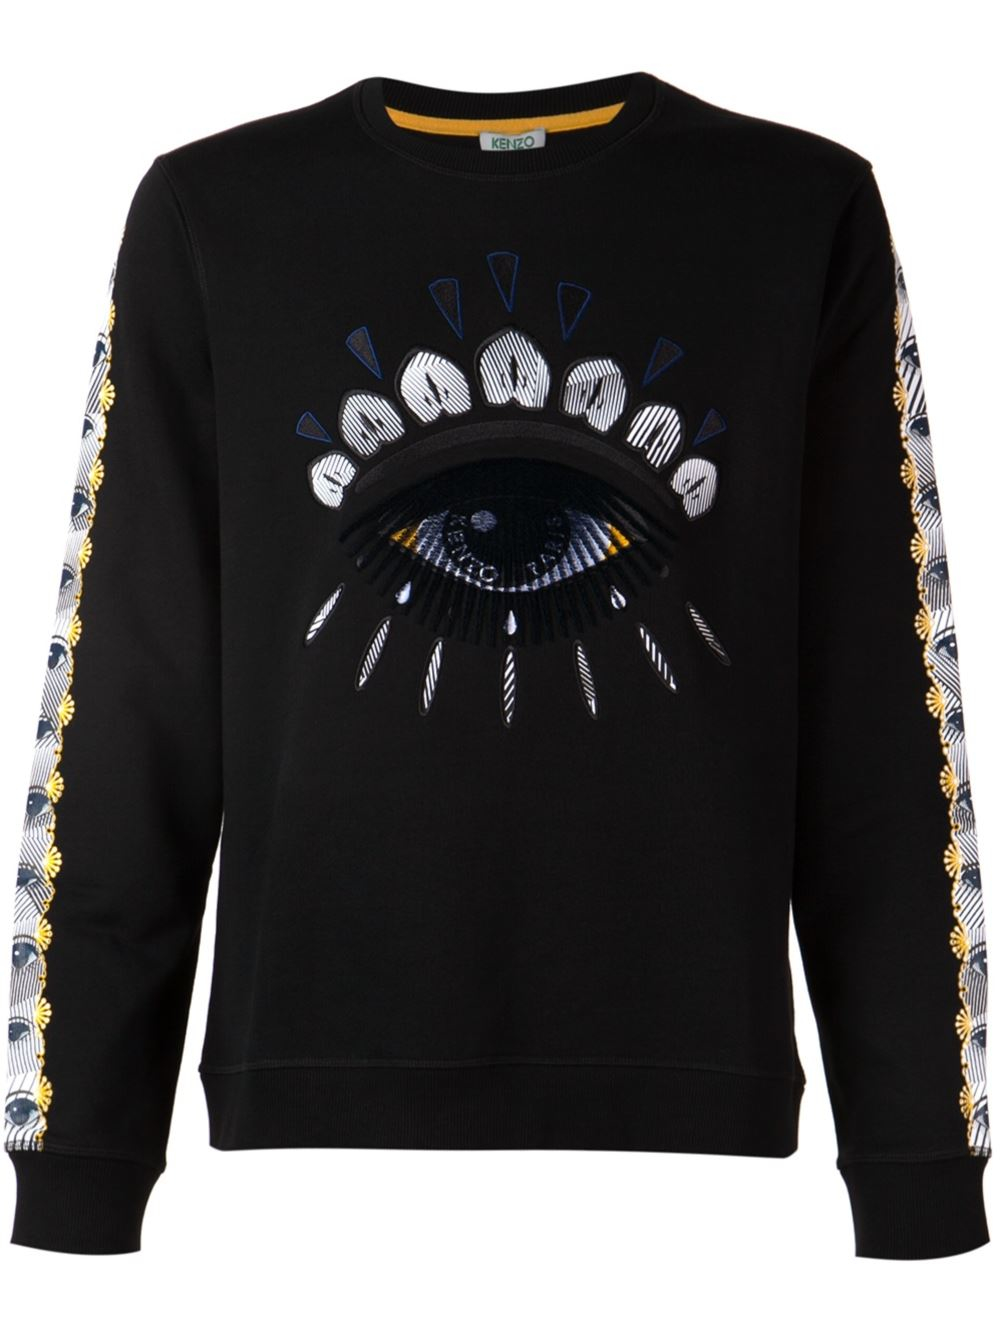 Kenzo Embroidered Icon Crewneck Sweatshirt in Black for Men - Save 40% ...